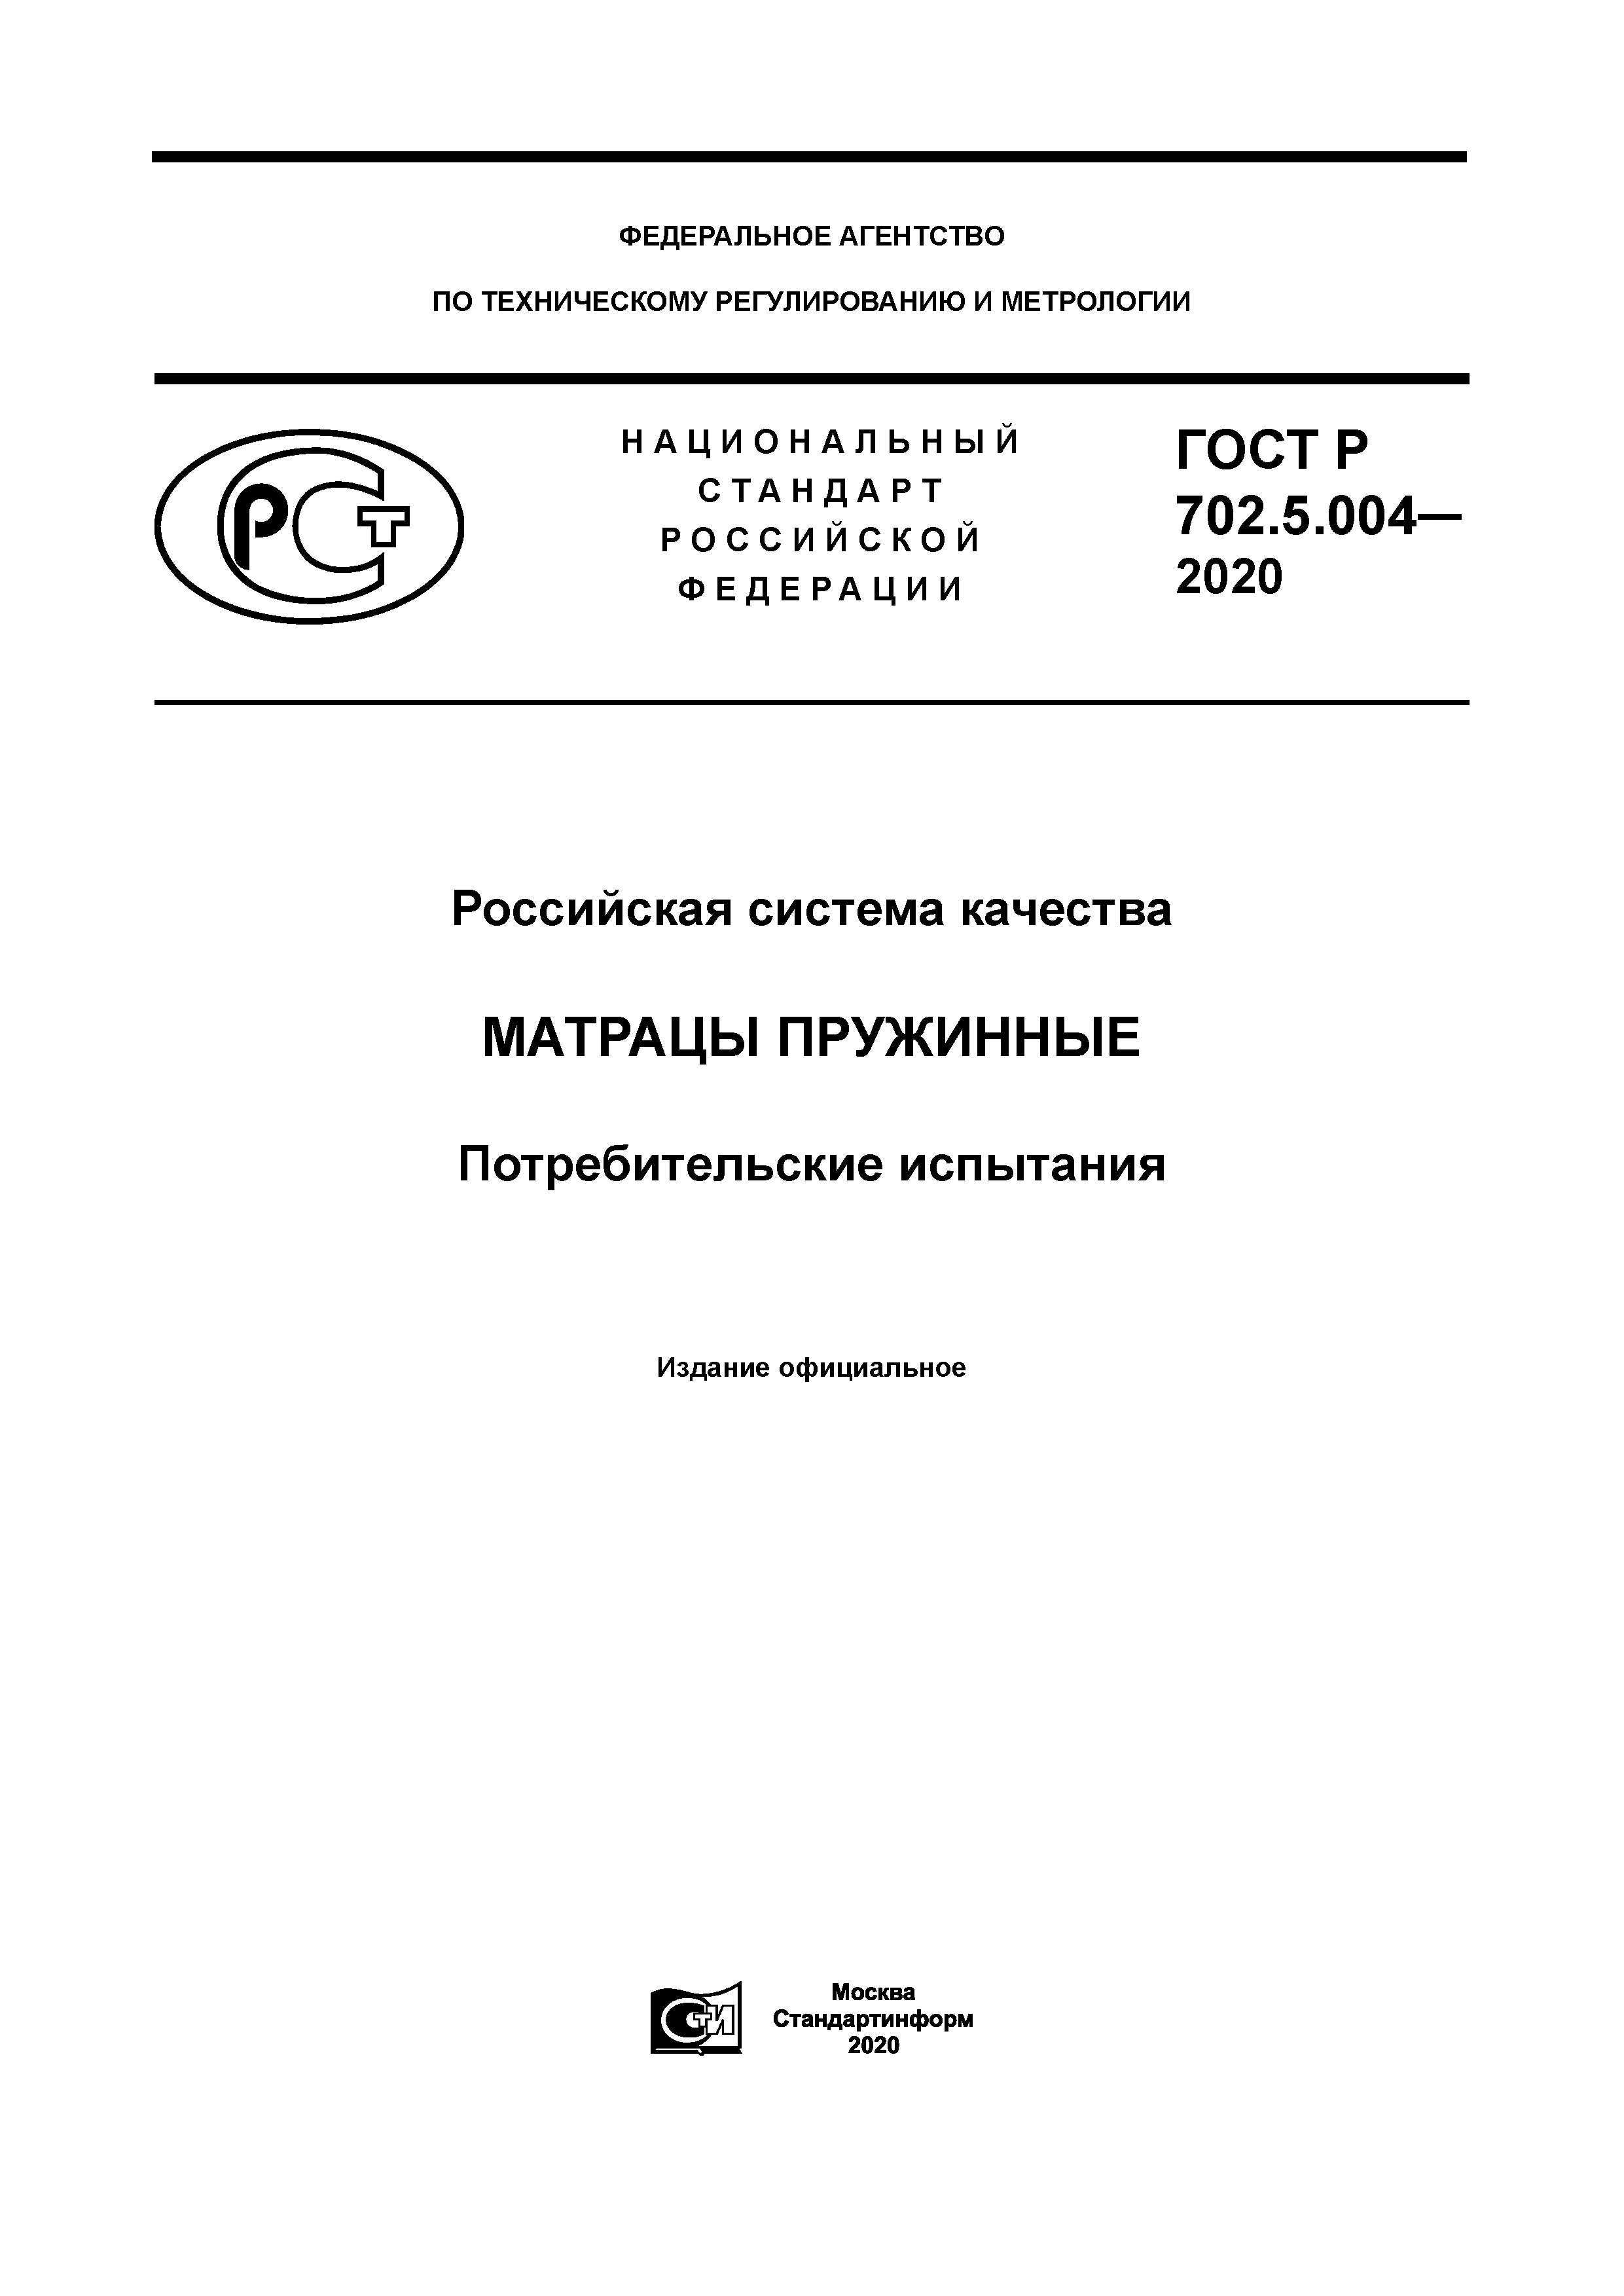 ГОСТ Р 702.5.004-2020